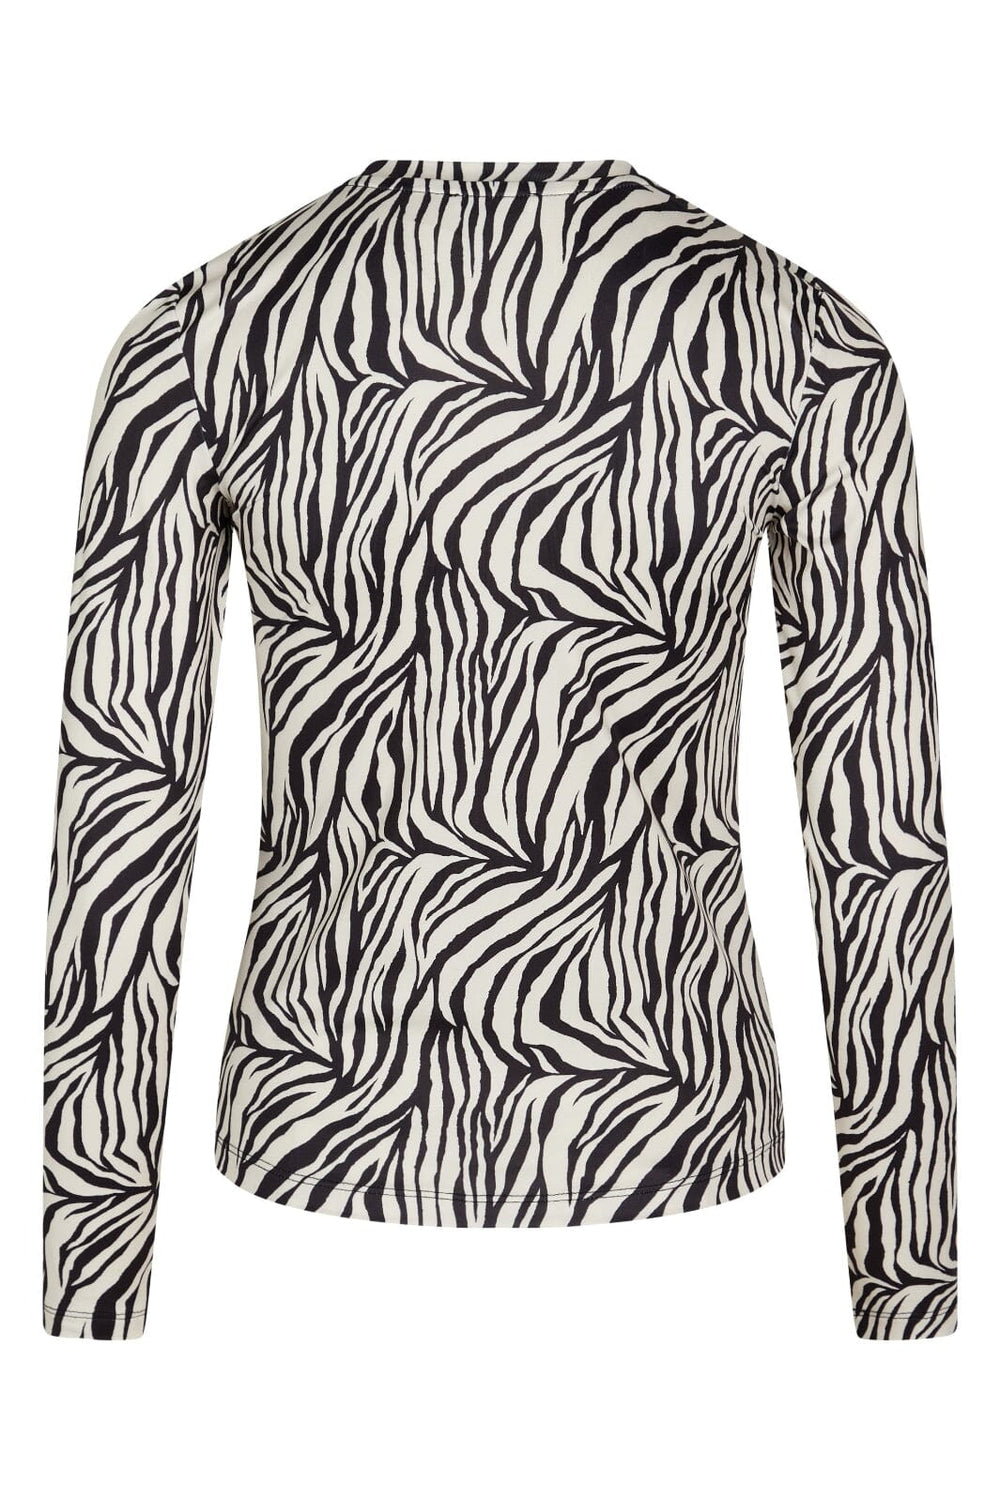 BZR - Regina Crew neck blouse - Zebra print Bluser 